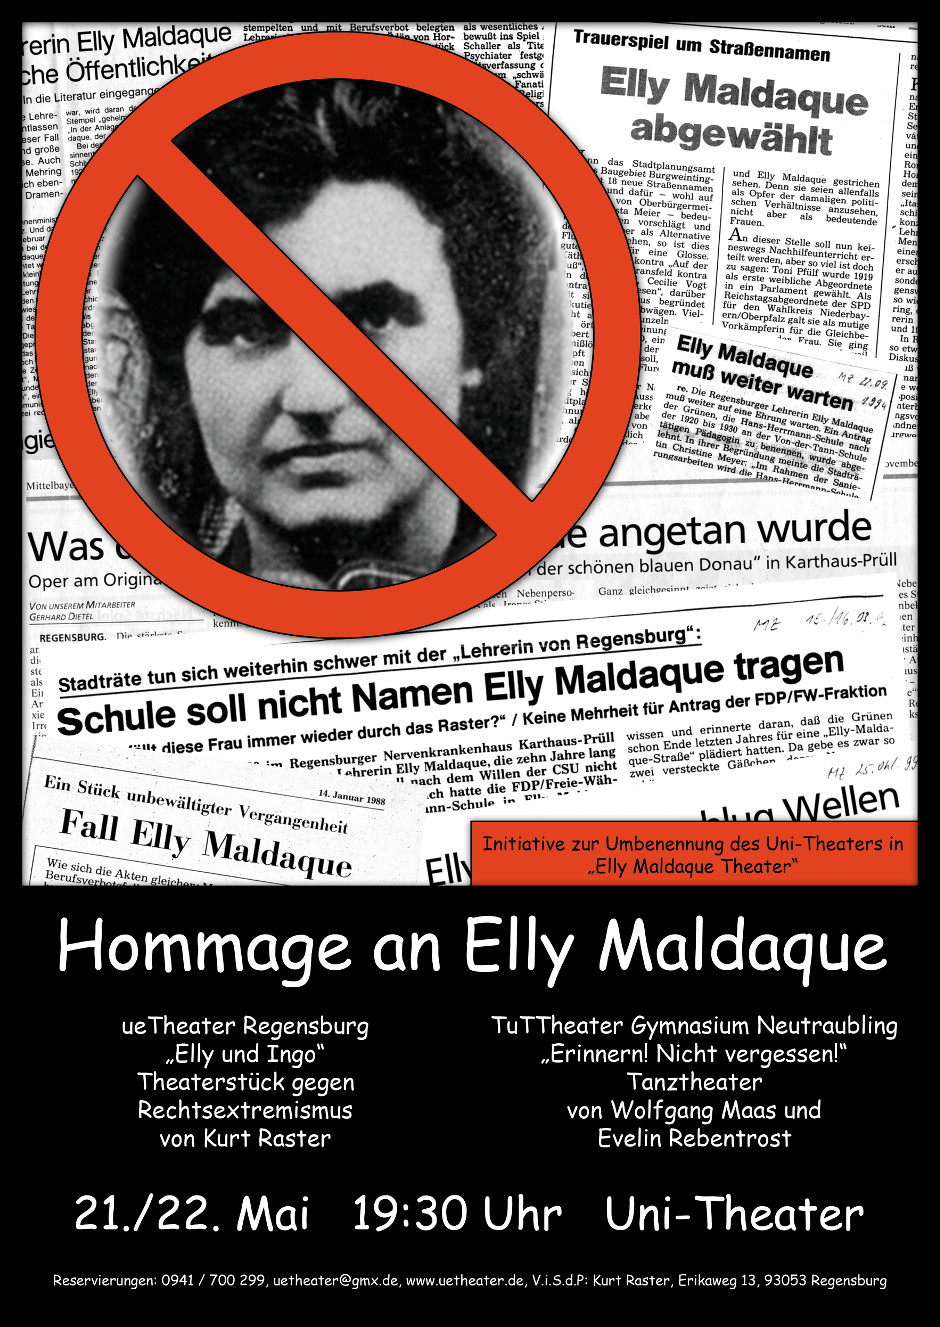 Hommage an Elly Maldaque